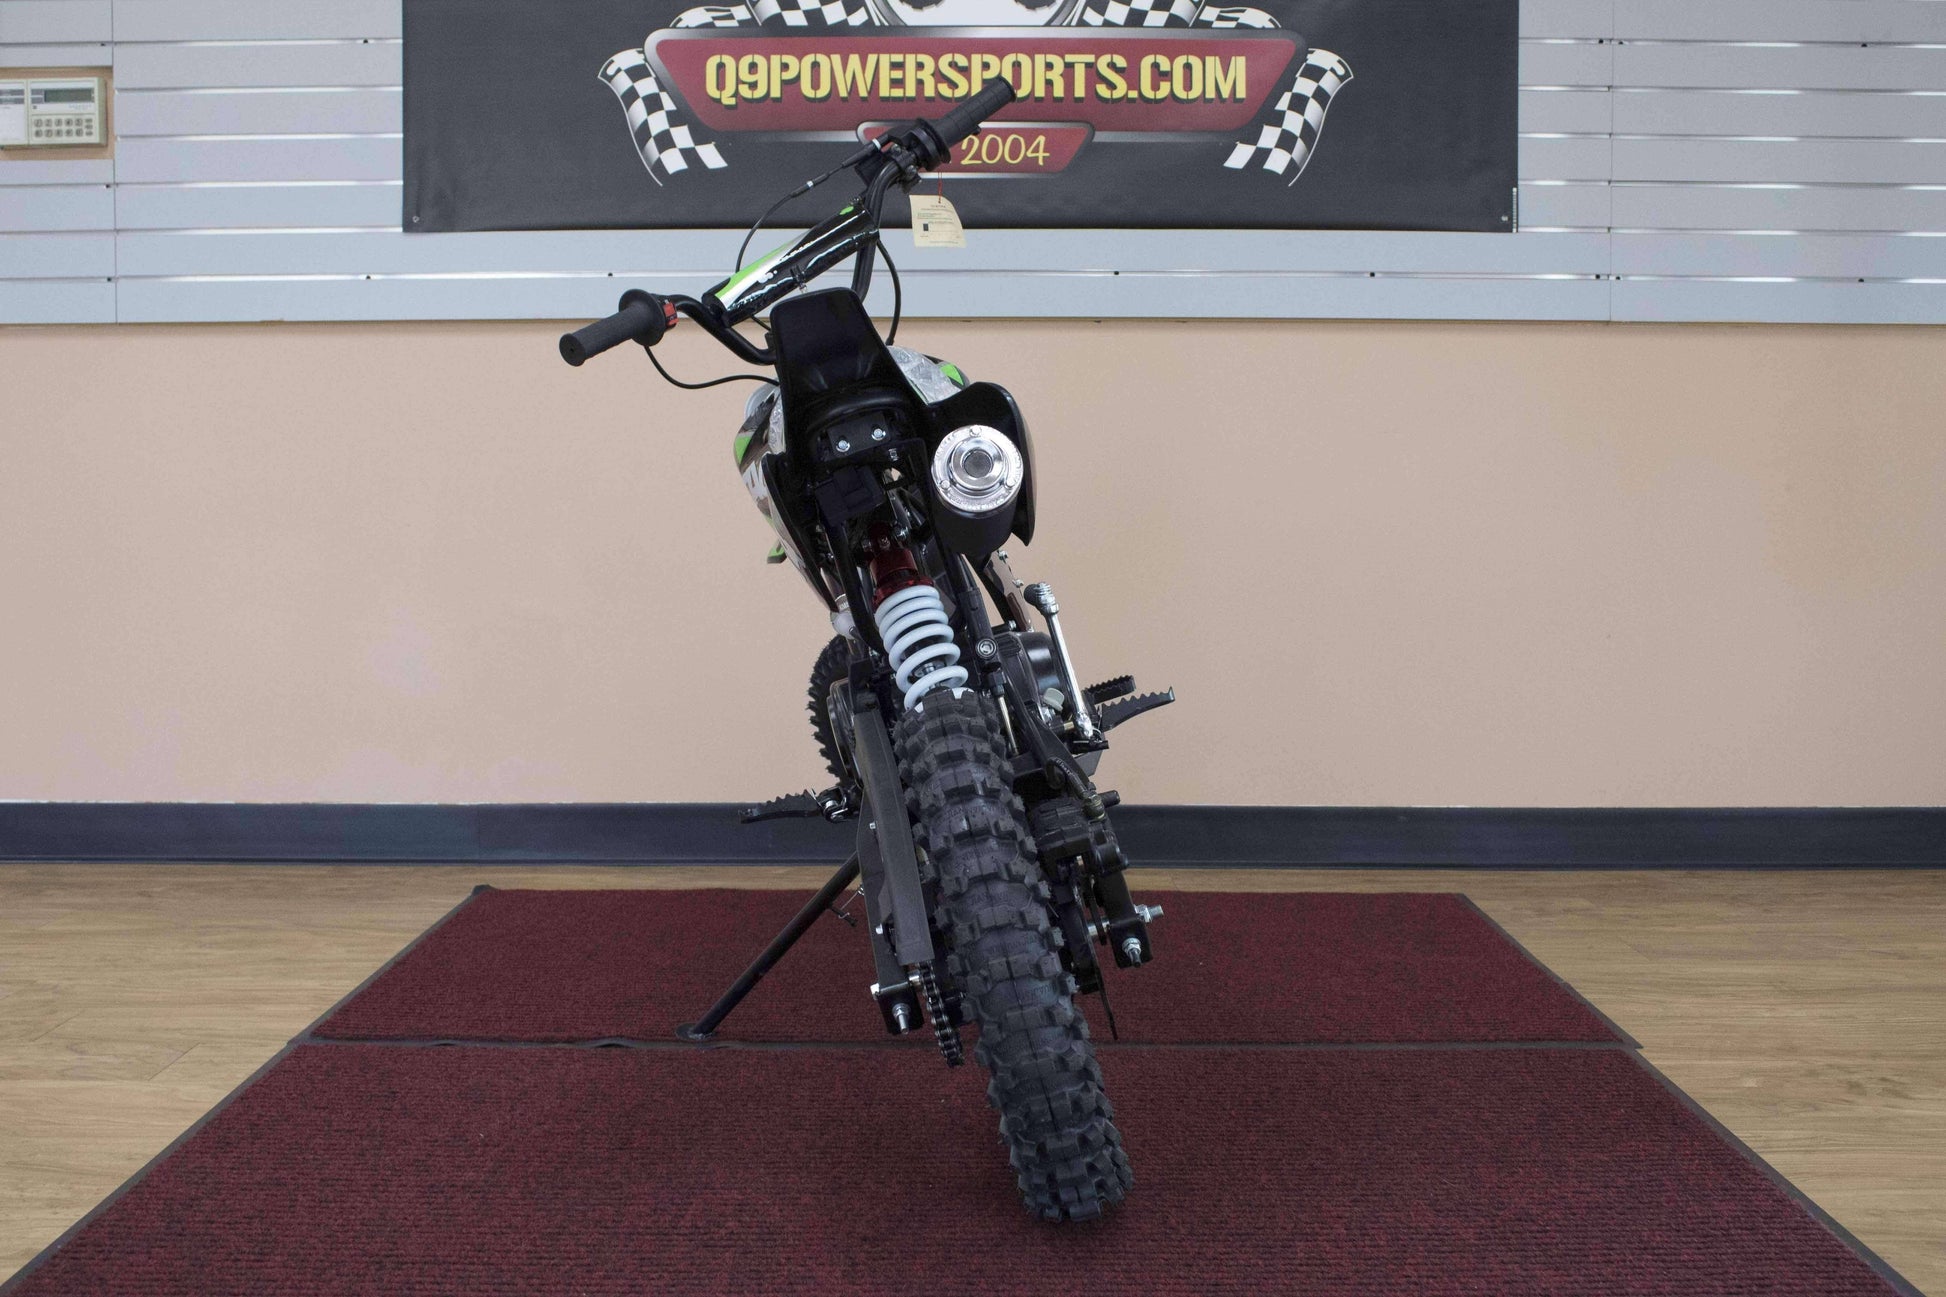 DB14 110cc Youth Dirt Bikes - Q9 PowerSports USA